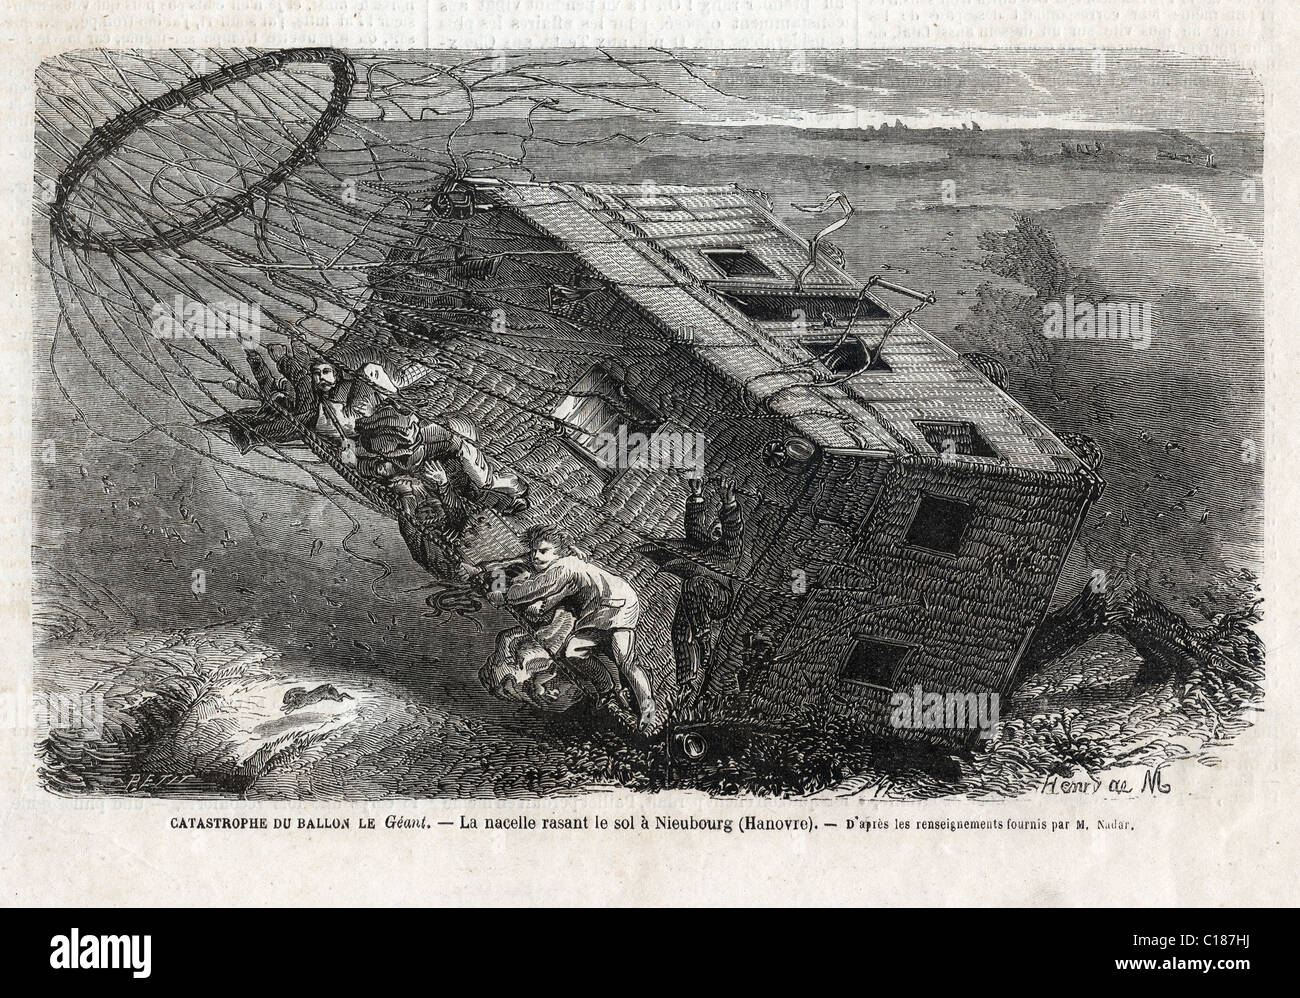 Die Katastrophe des Ballons "Le Géant" auf "Nieubourg" in der Nähe von 1863. Stockfoto